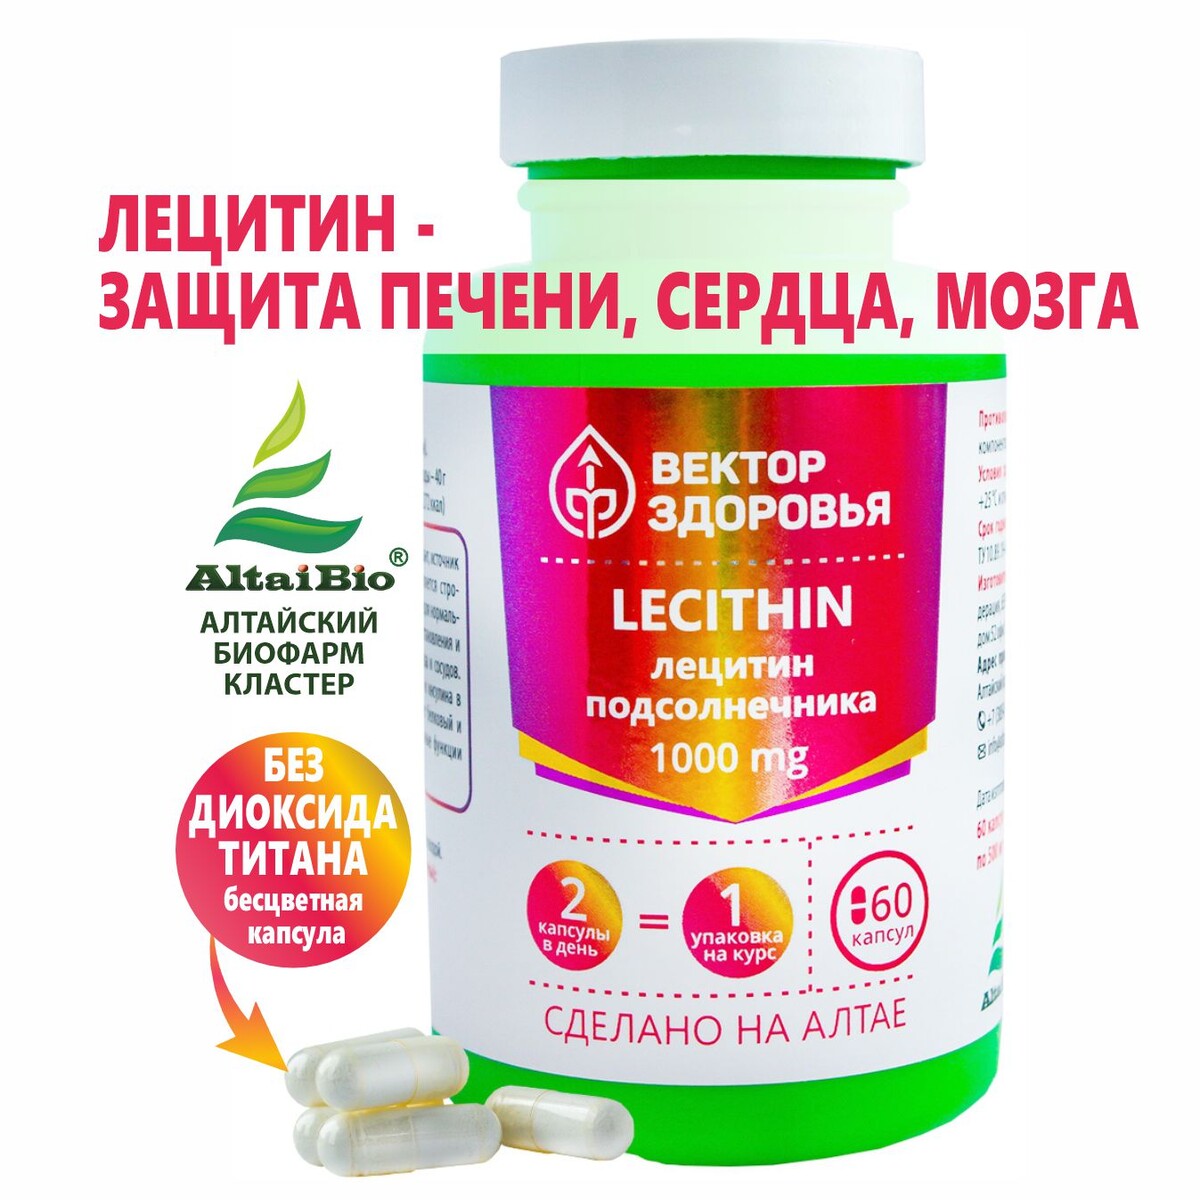 Комплекс lecithin лецитин подсолнечника комплекс таурин глицин лецитин